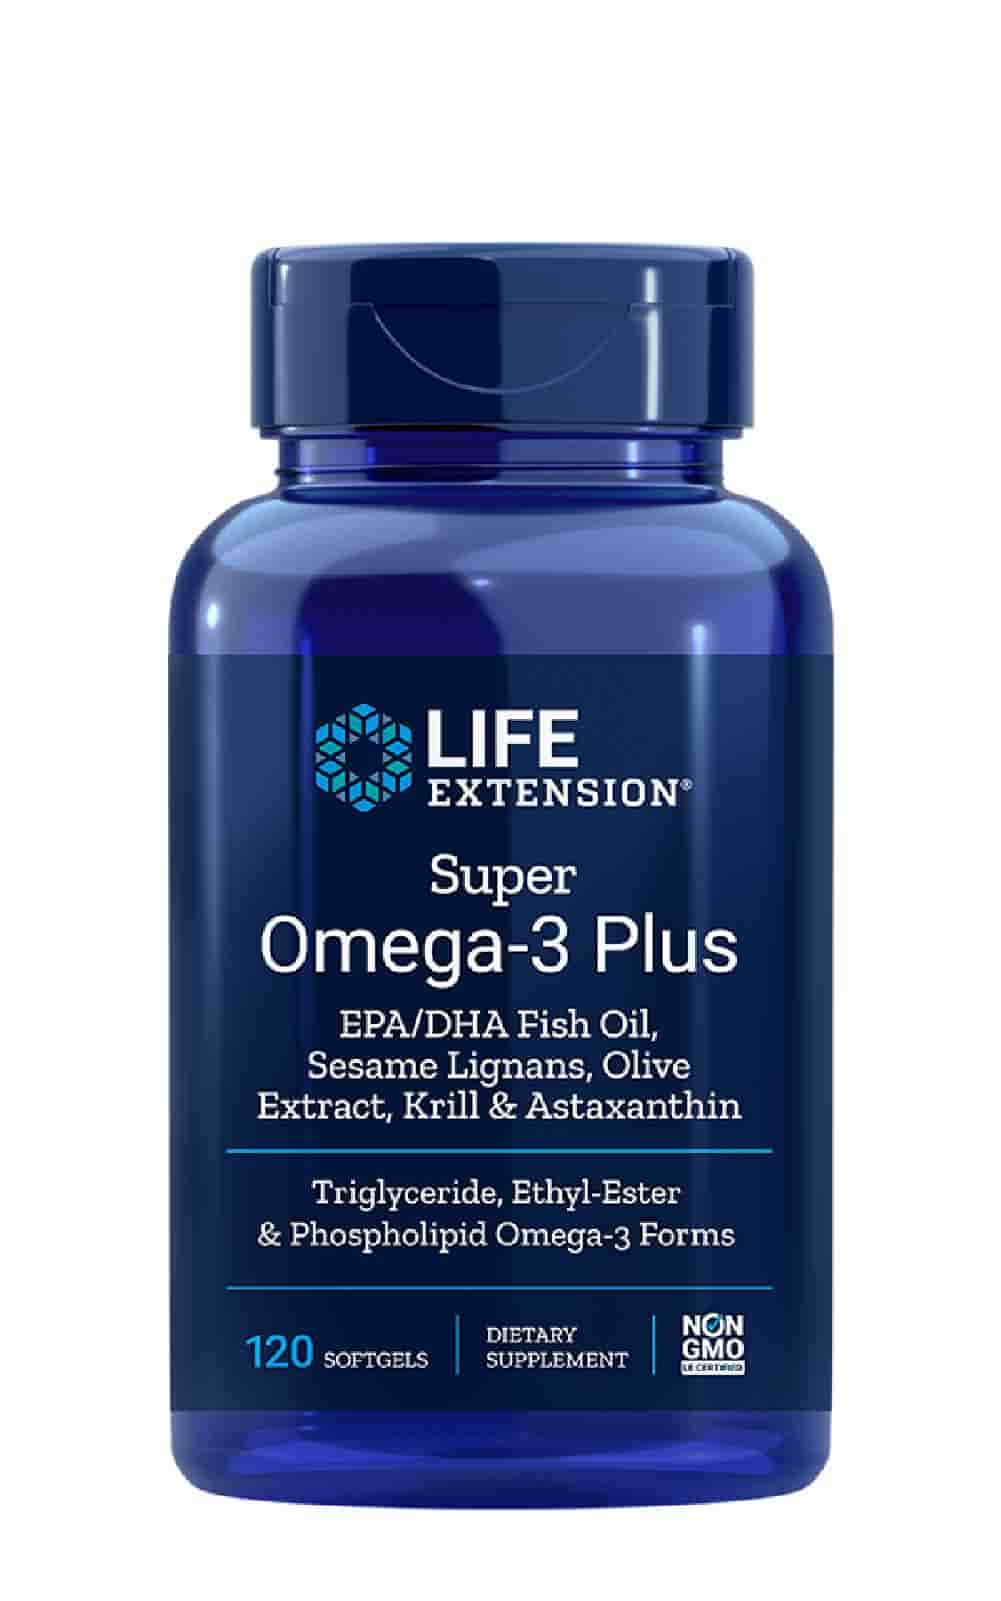 Life Extension Super Omega-3 Plus EPA/DHA Fish Oil bei LiveHelfi kaufen